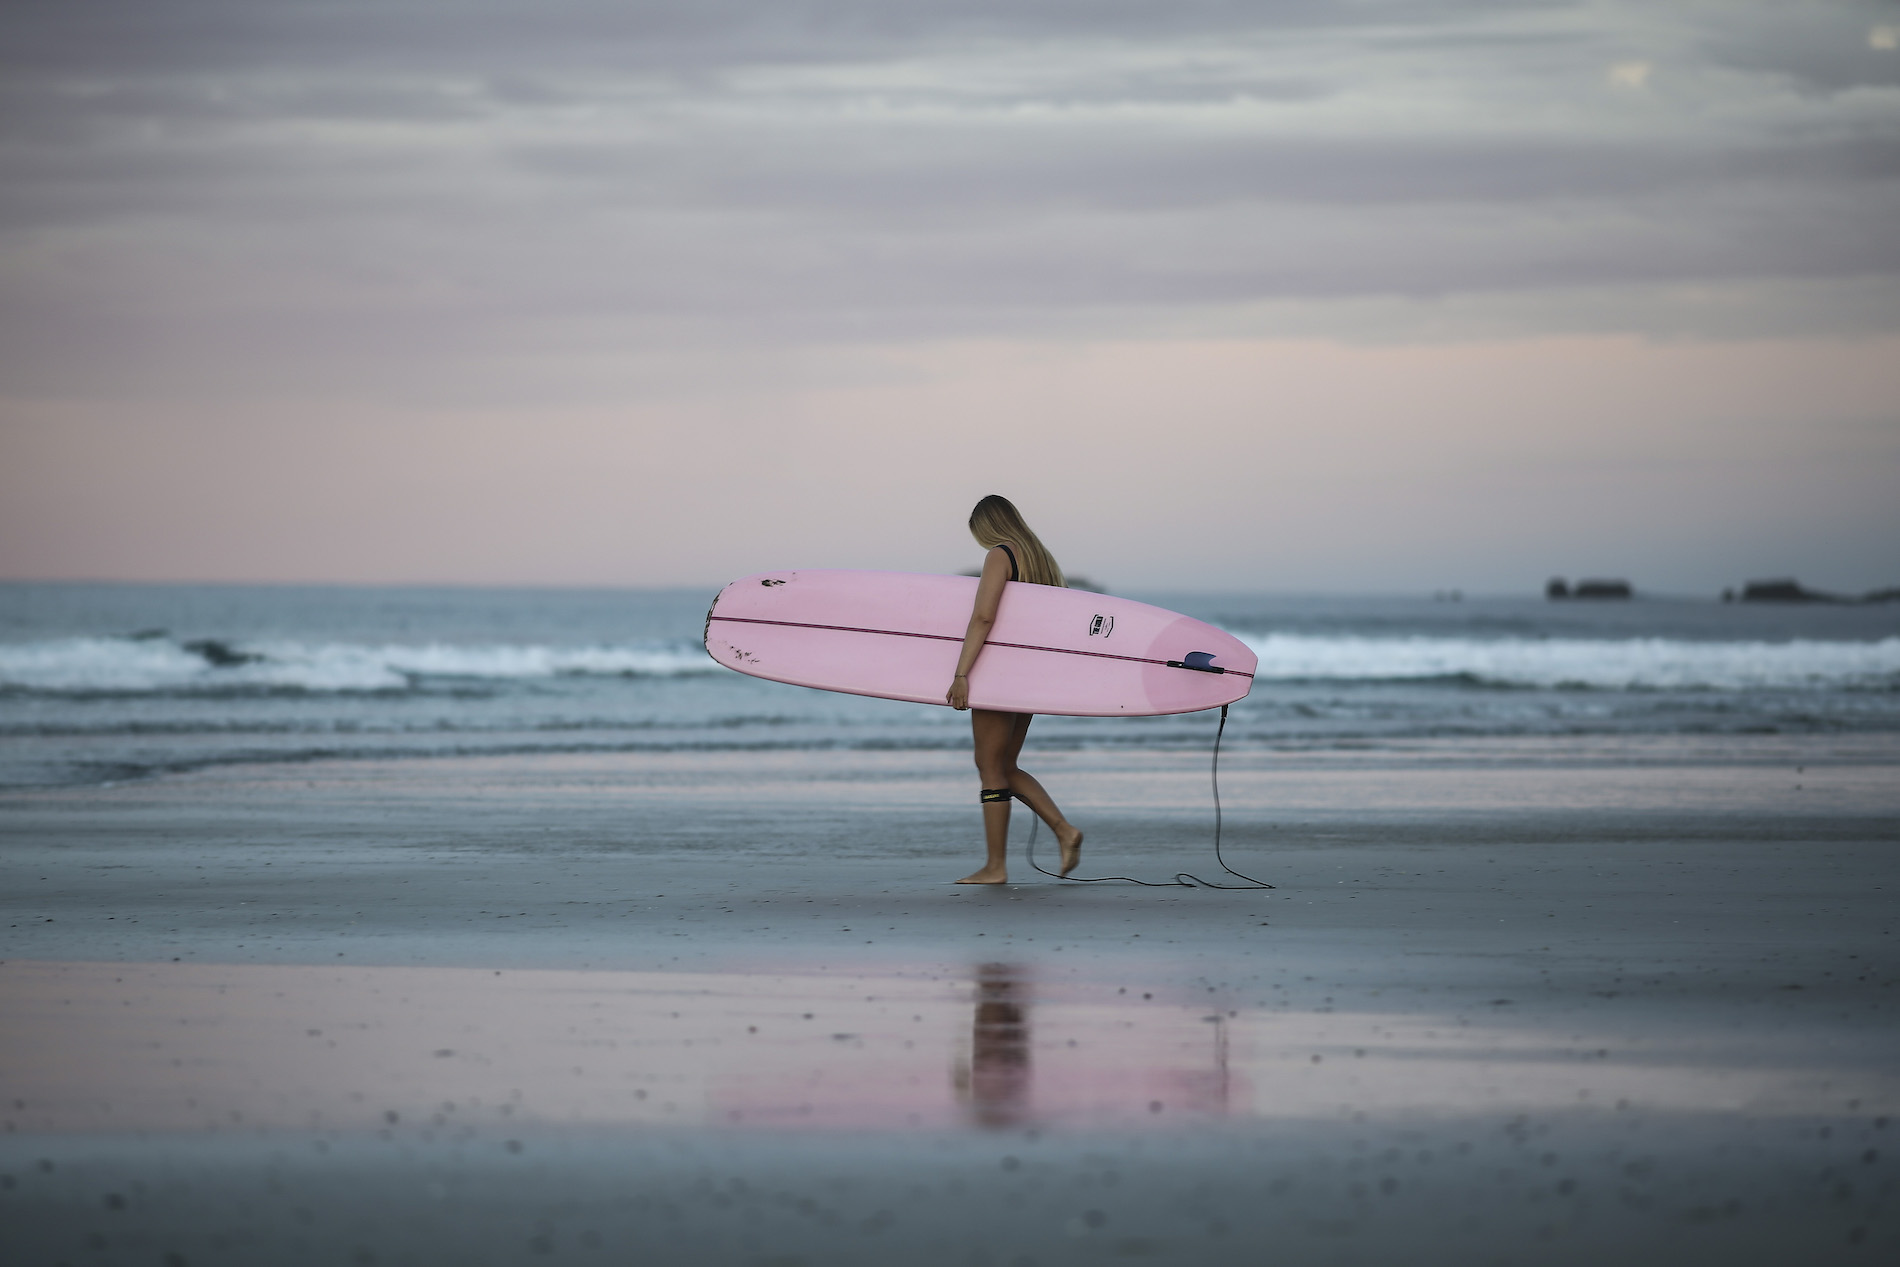 Nature of Surf Women